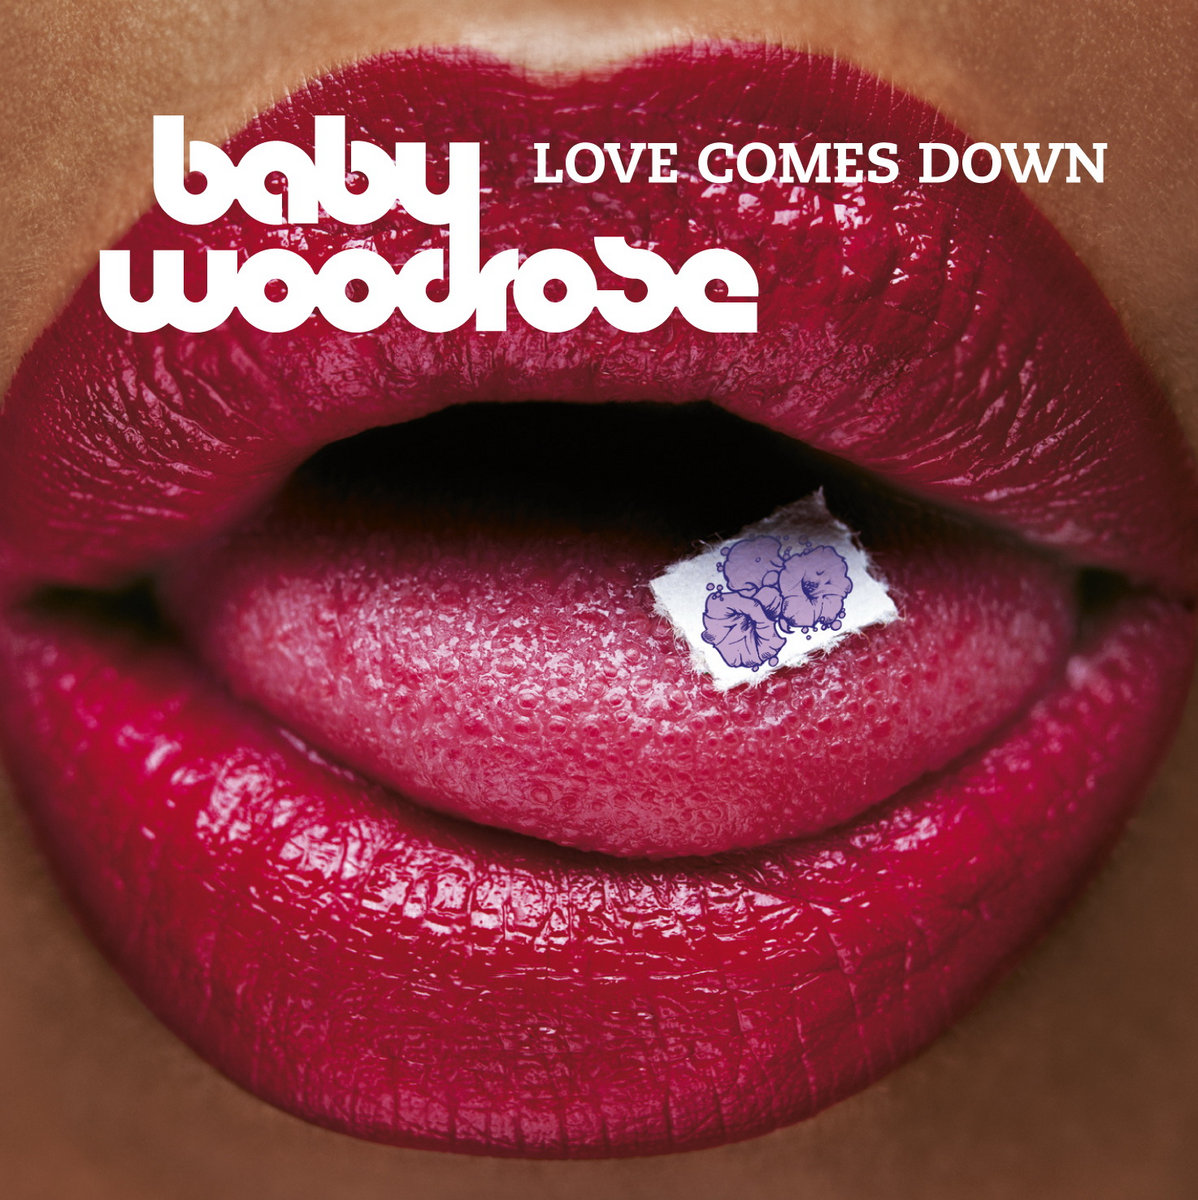 Baby Woodrose - Love Comes Down (Blue Vinyl - LP